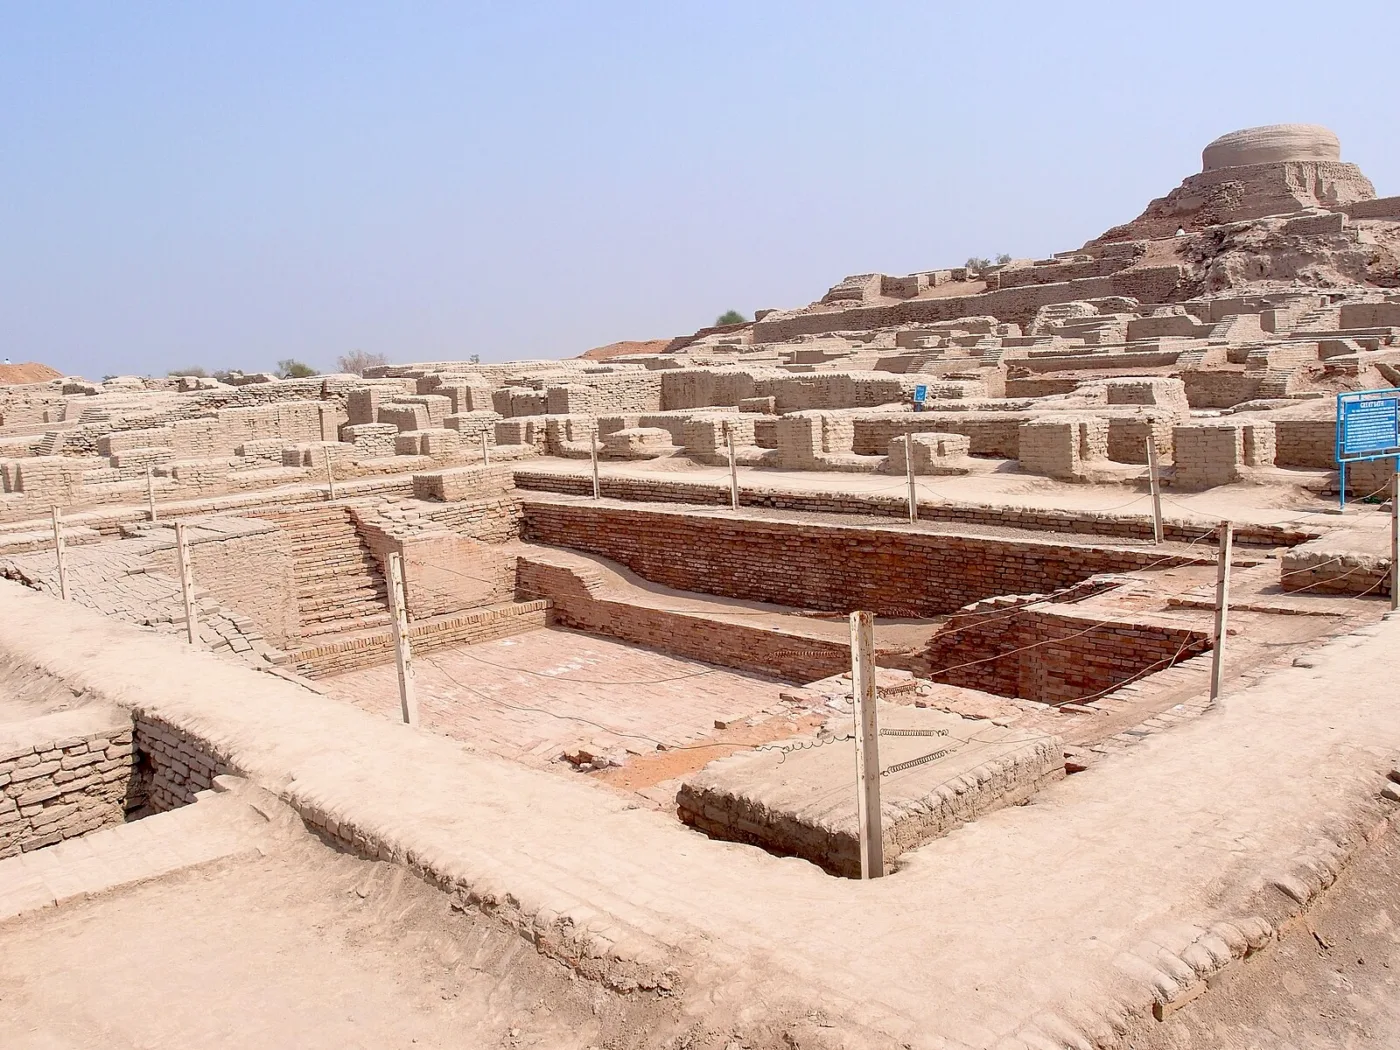 Excavated ruins of Mohenjo-daro